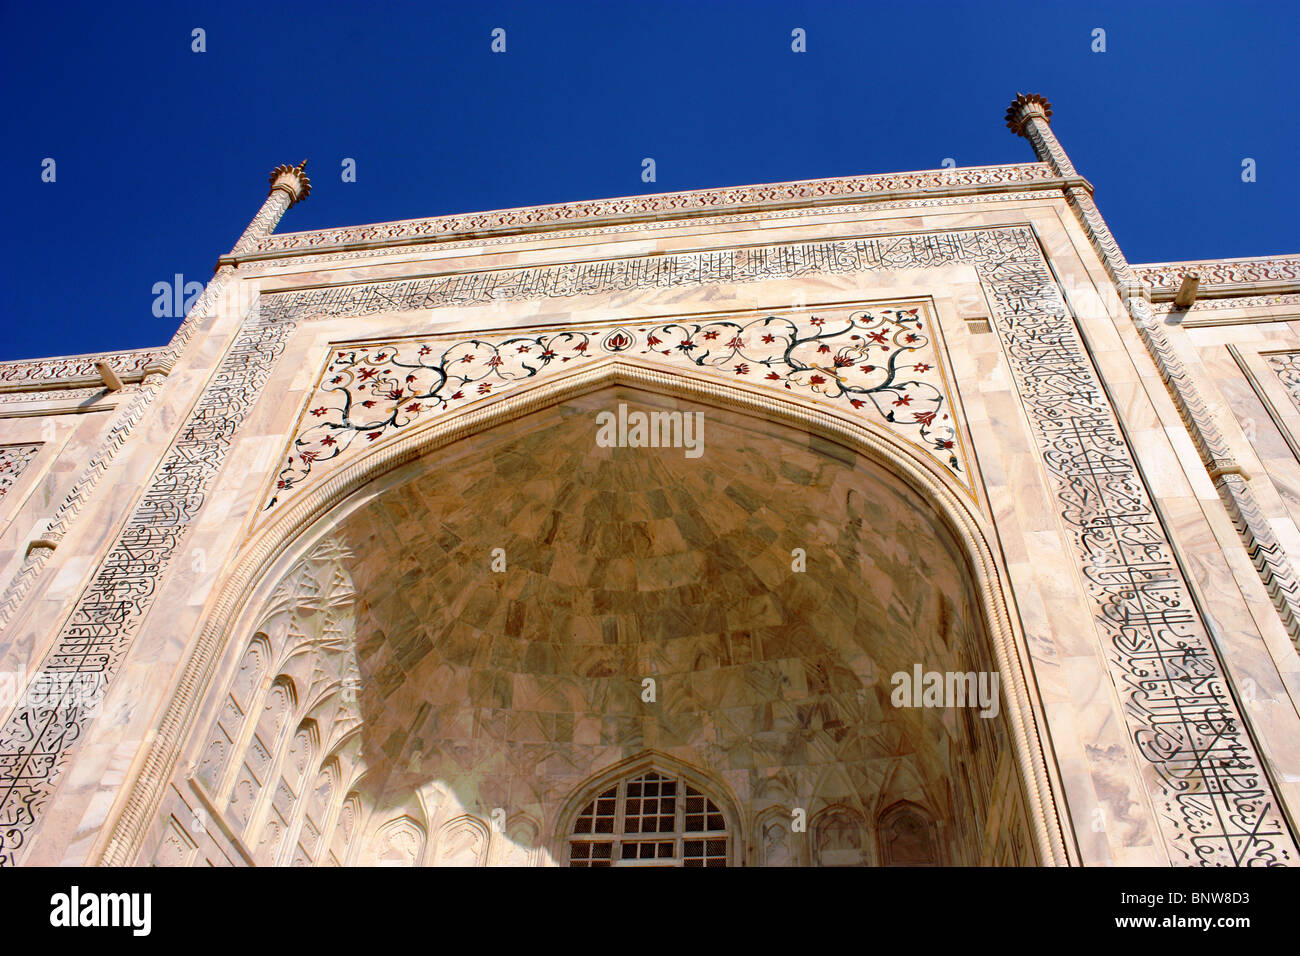 wide angle view of Taj mahal - tomb of Mumtaz mahal Stock Photo